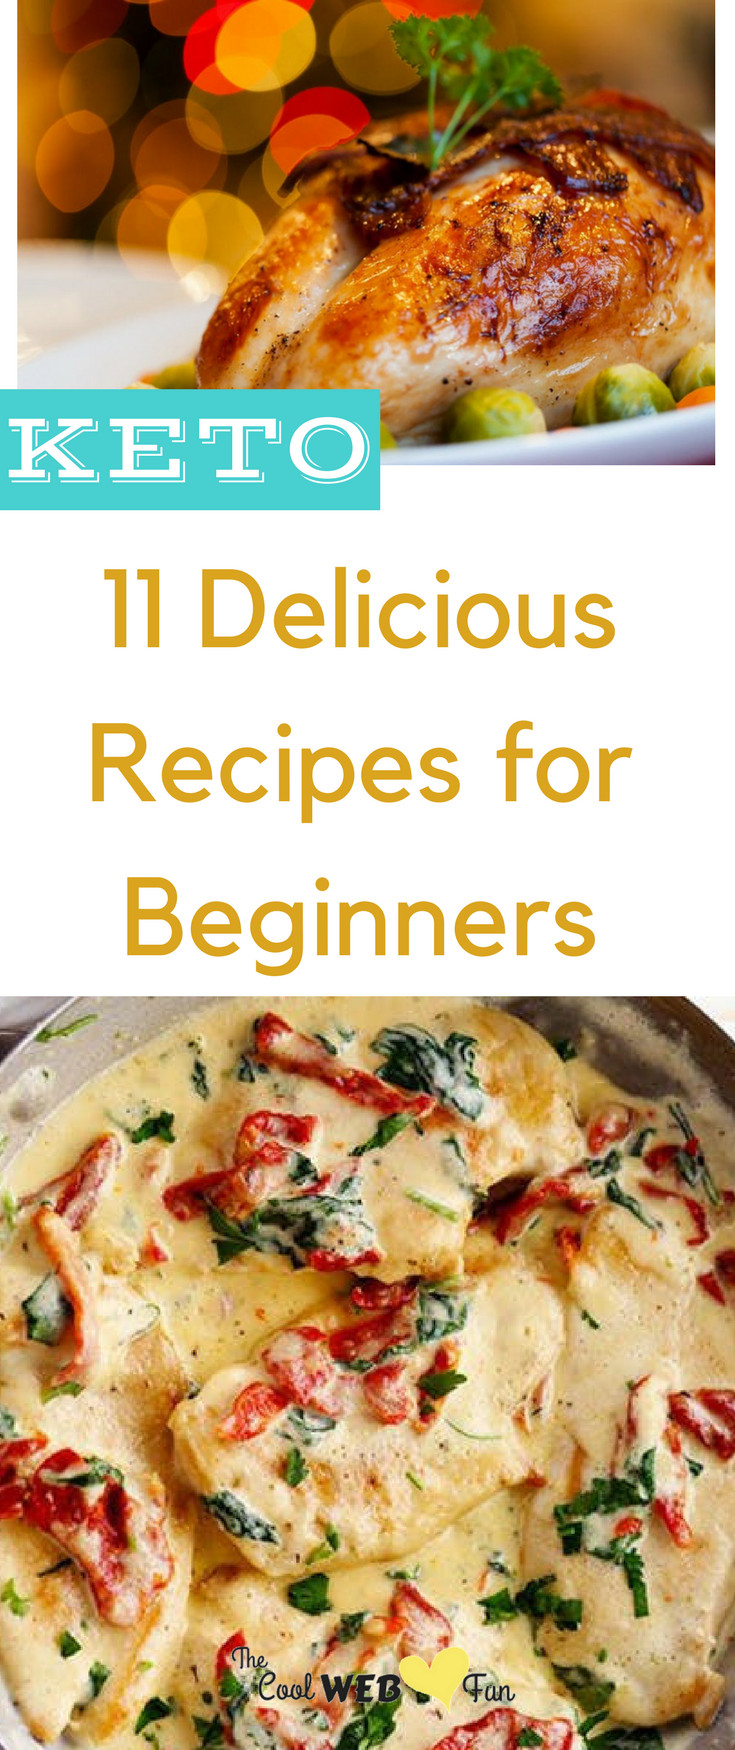 Keto Diet Recipes For Beginners Breakfast
 11 Keto Recipes for Beginners Fitness Bash